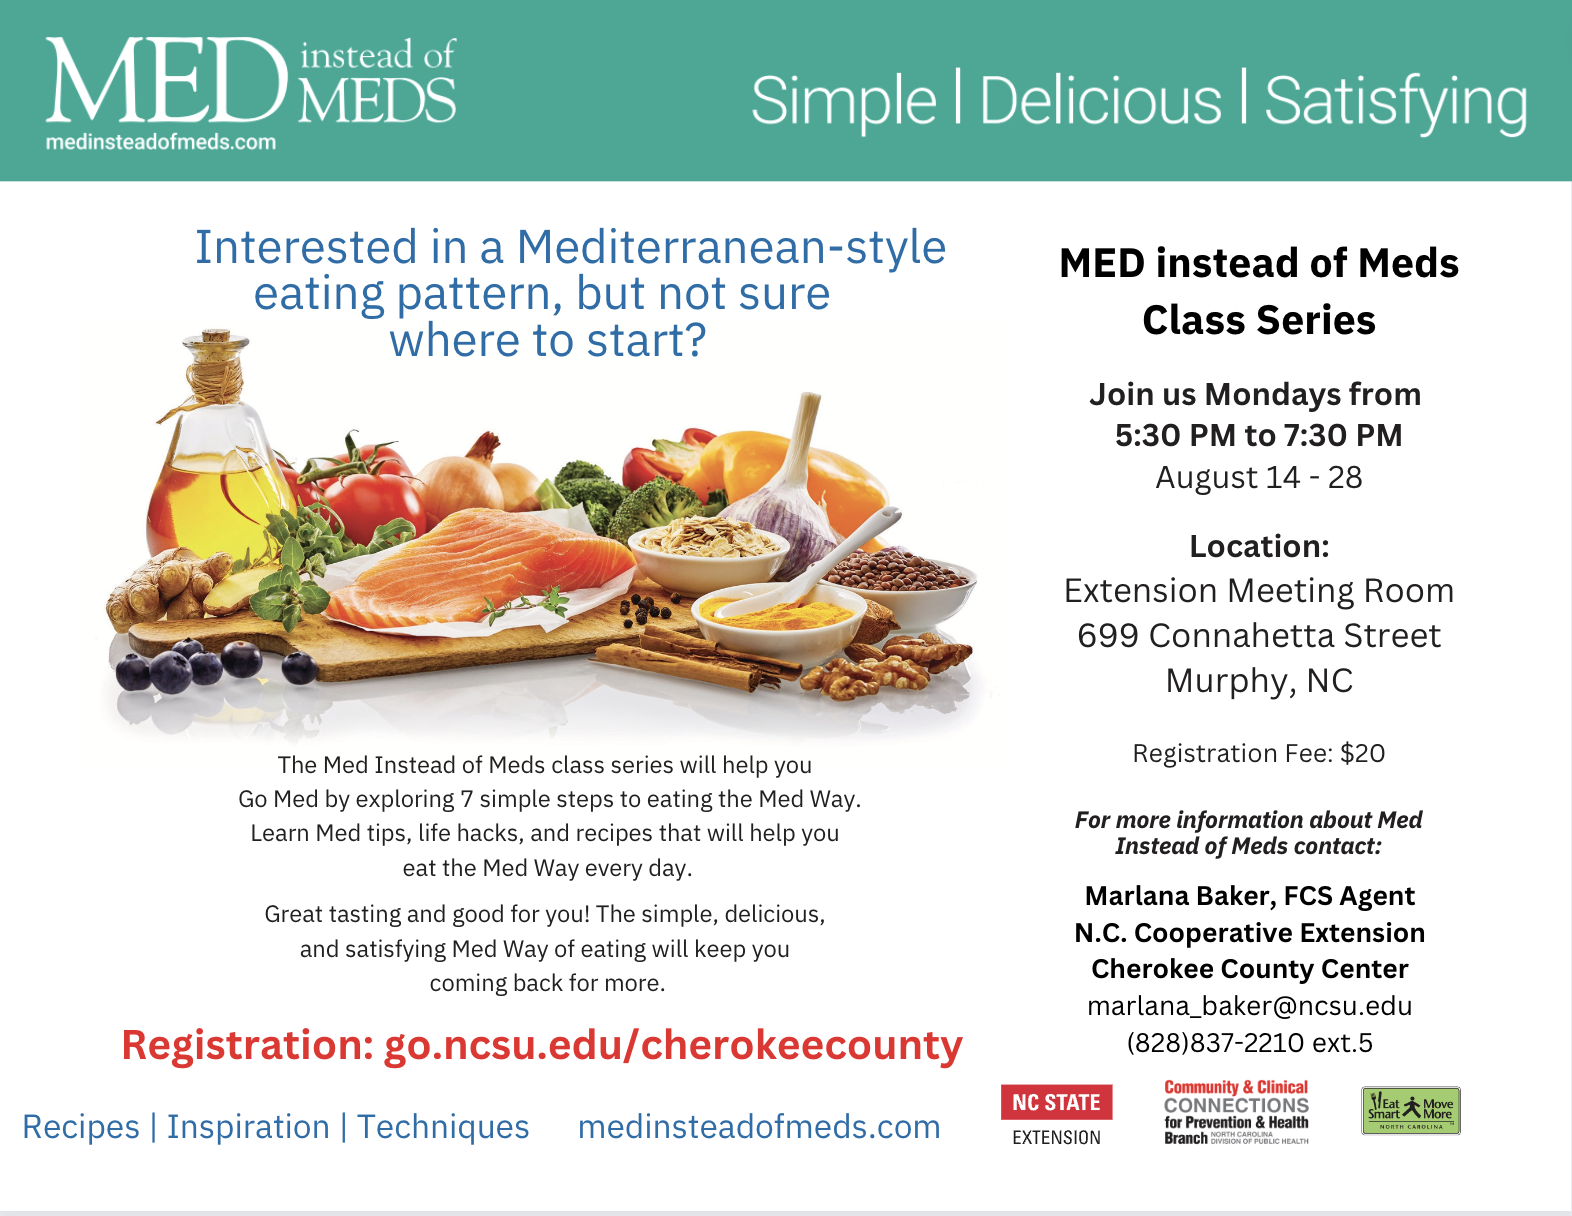 MED instead of Meds Class Series, Register at go.ncsu.edu/cherokeecounty